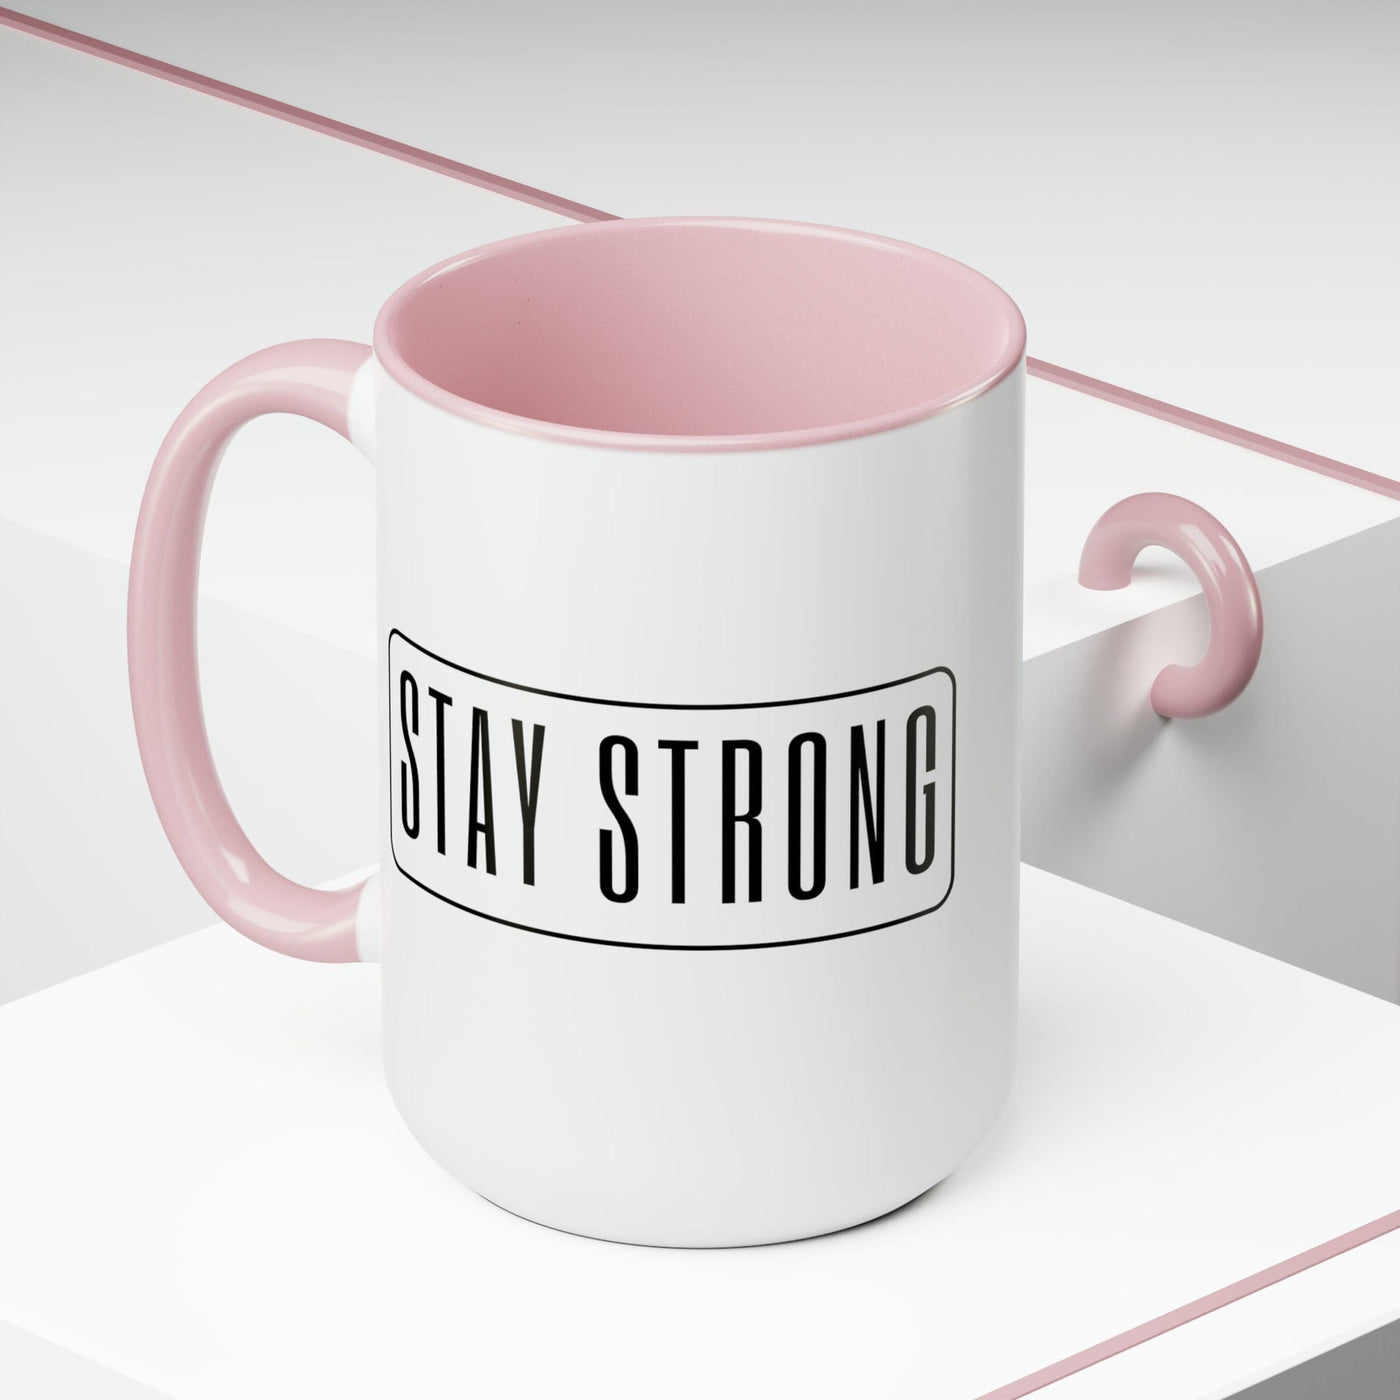 Accent Ceramic Coffee Mug 15oz - Stay Strong - Motivational Affirmation - Black